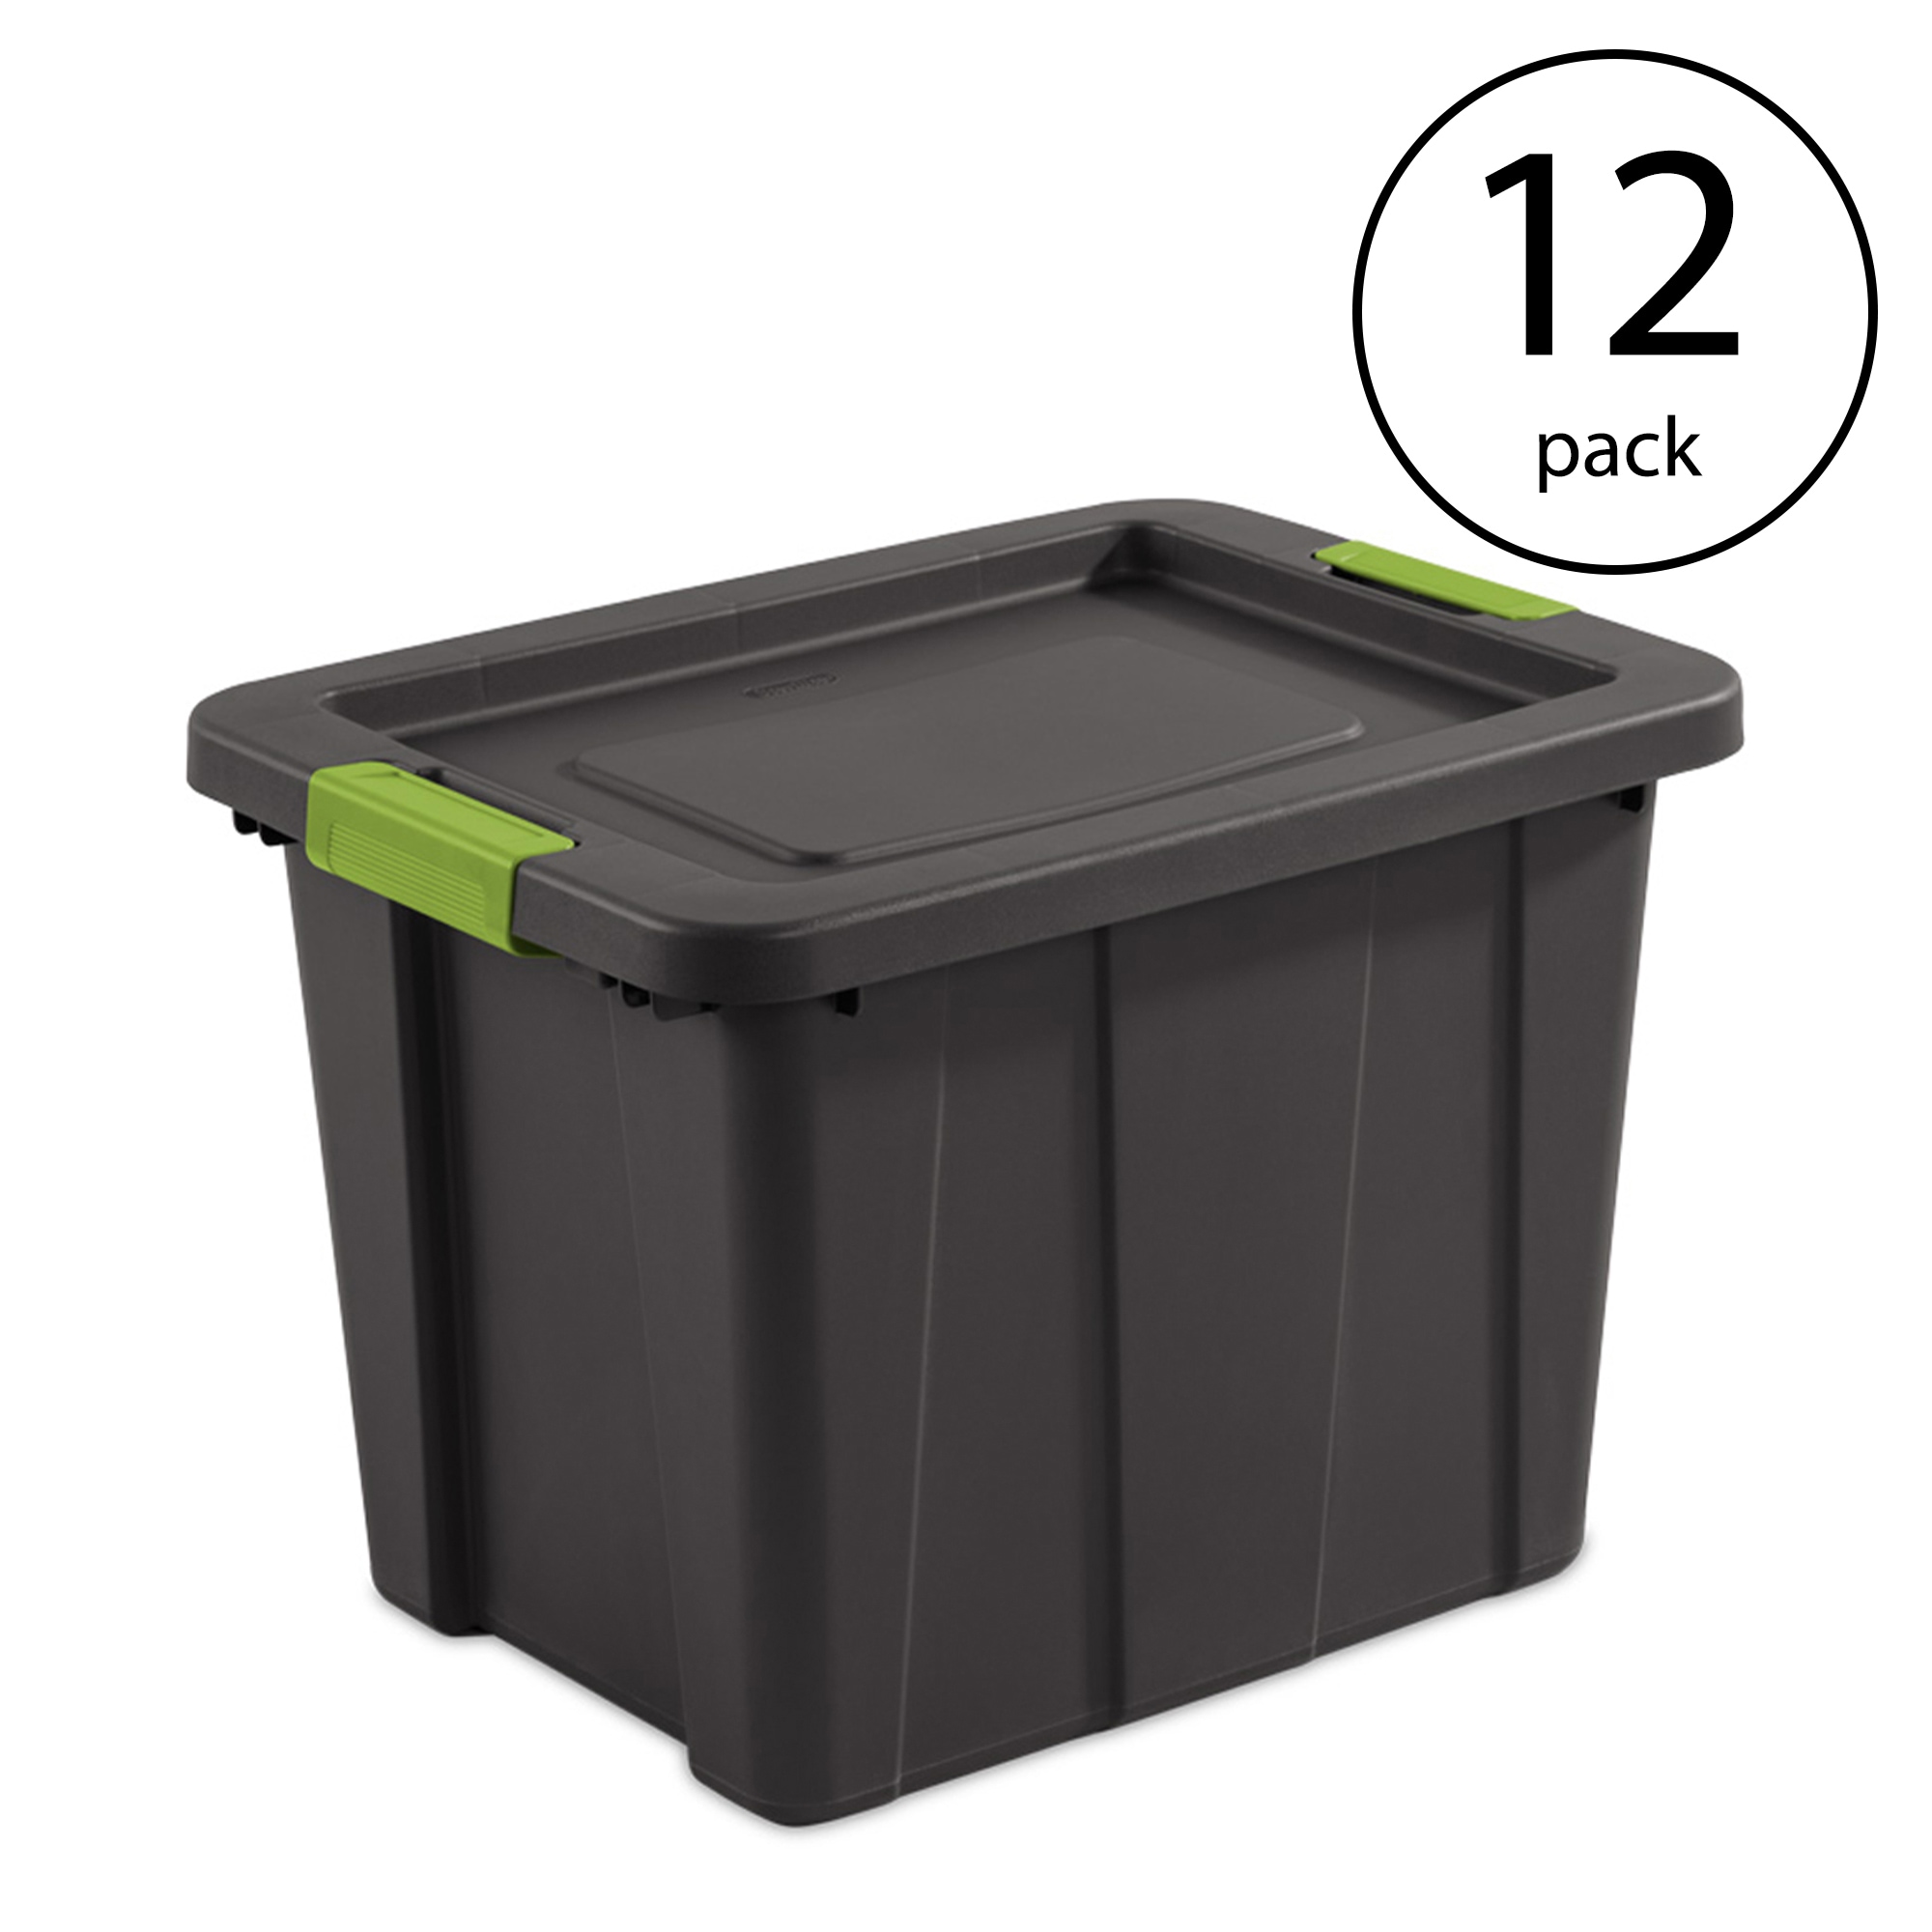 Sterilite 18 Quart Clear Plastic Storage Bin with Latch Lid, (12 Pack) 